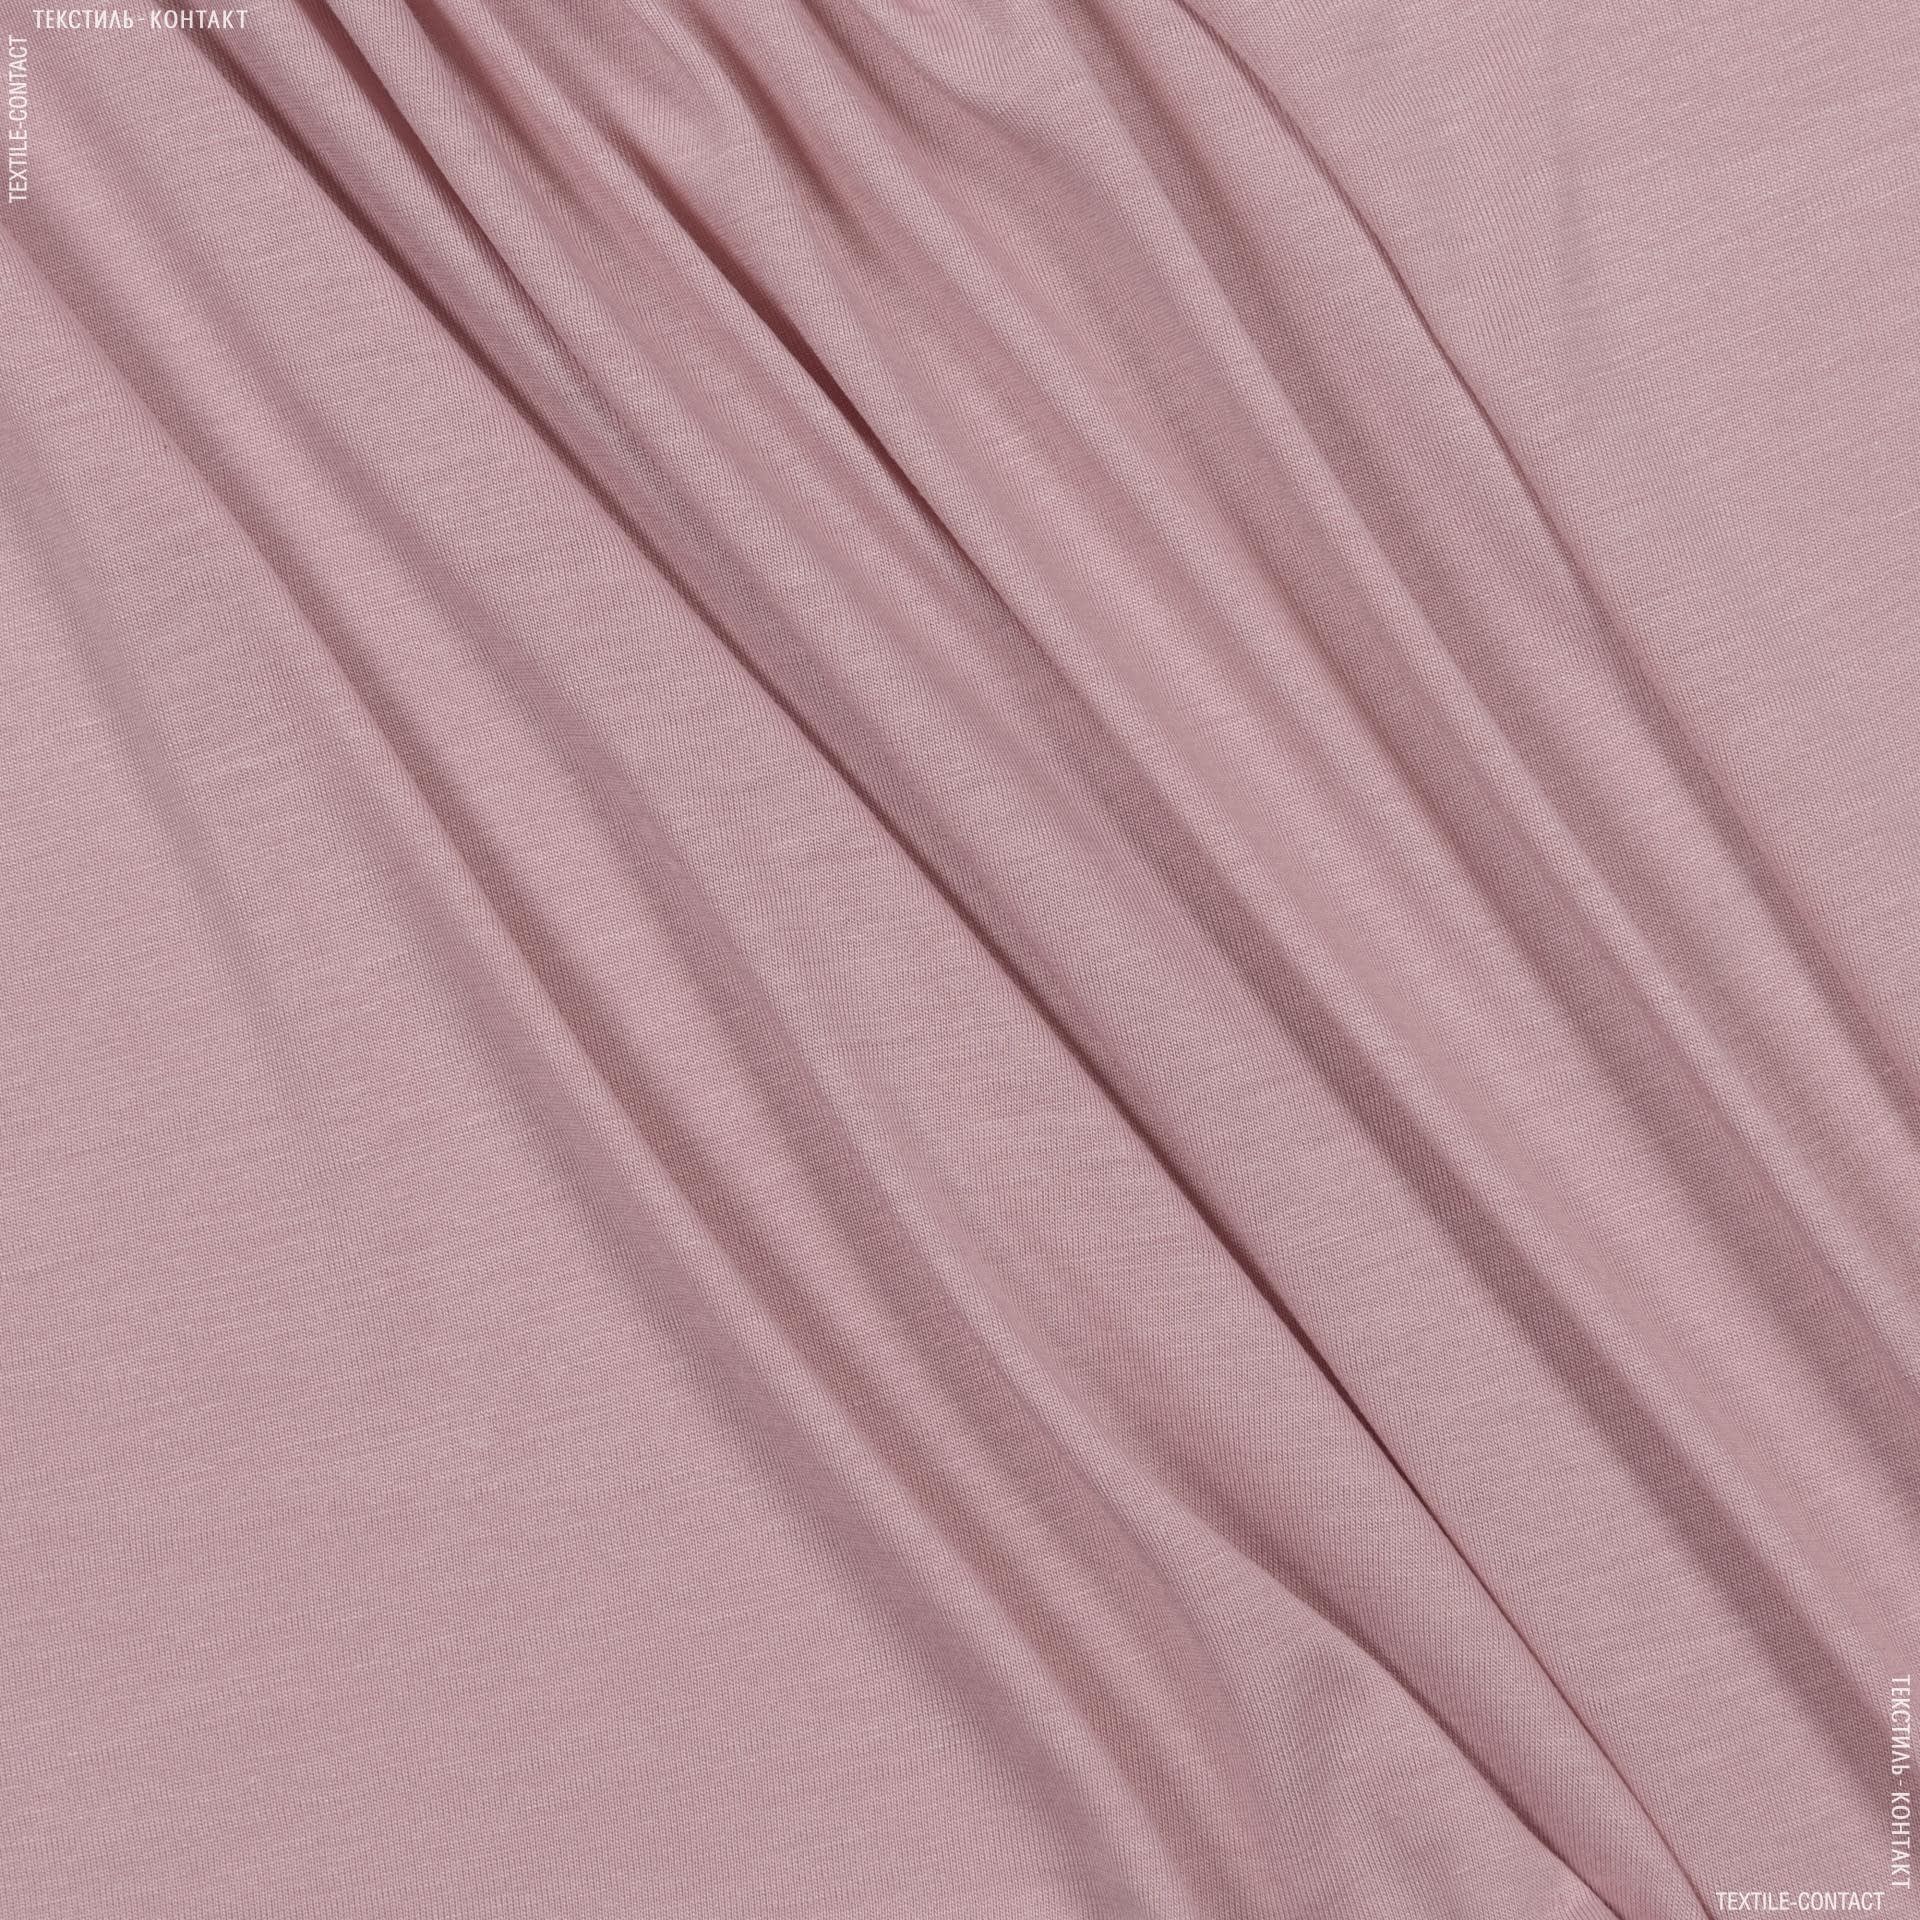 Ткани для платьев - Трикотаж фрезово-розовый